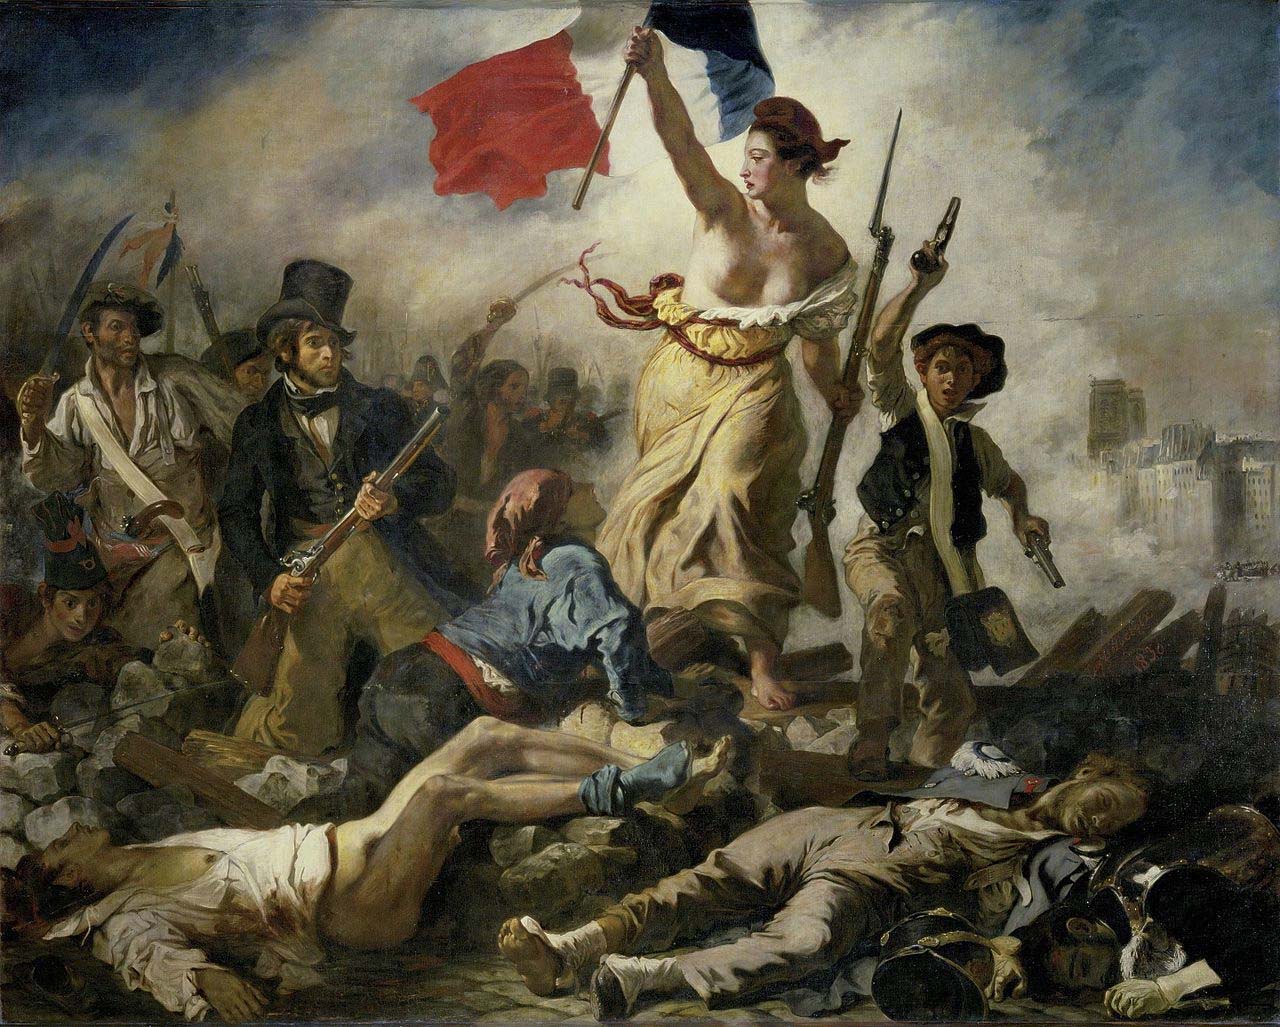 Romantic Painting Liberty Leading the People, Eugene Delacroix 1830